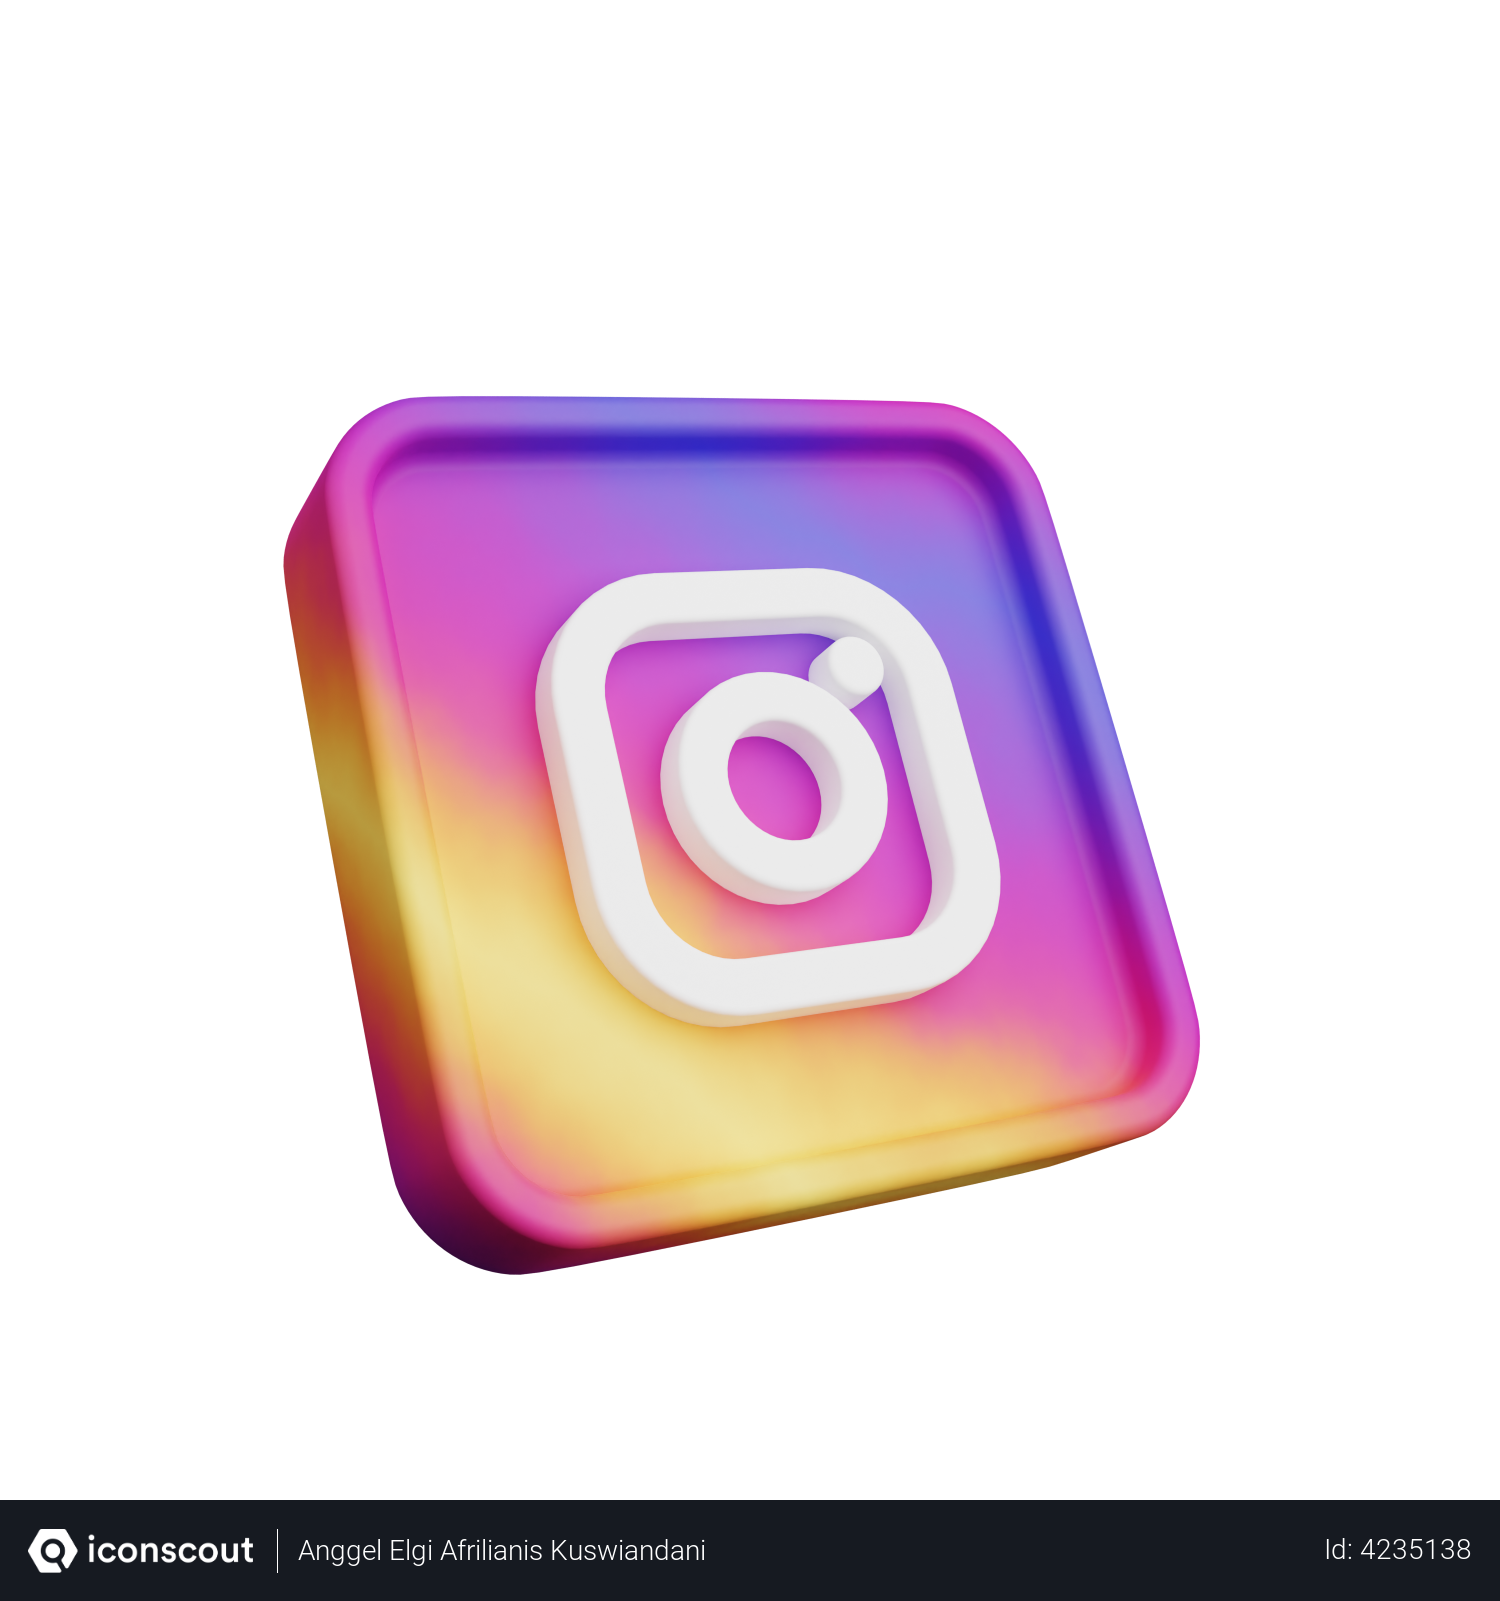 instagram 3d logo png - Photo #2591 - TakePNG | Download Free PNG Images